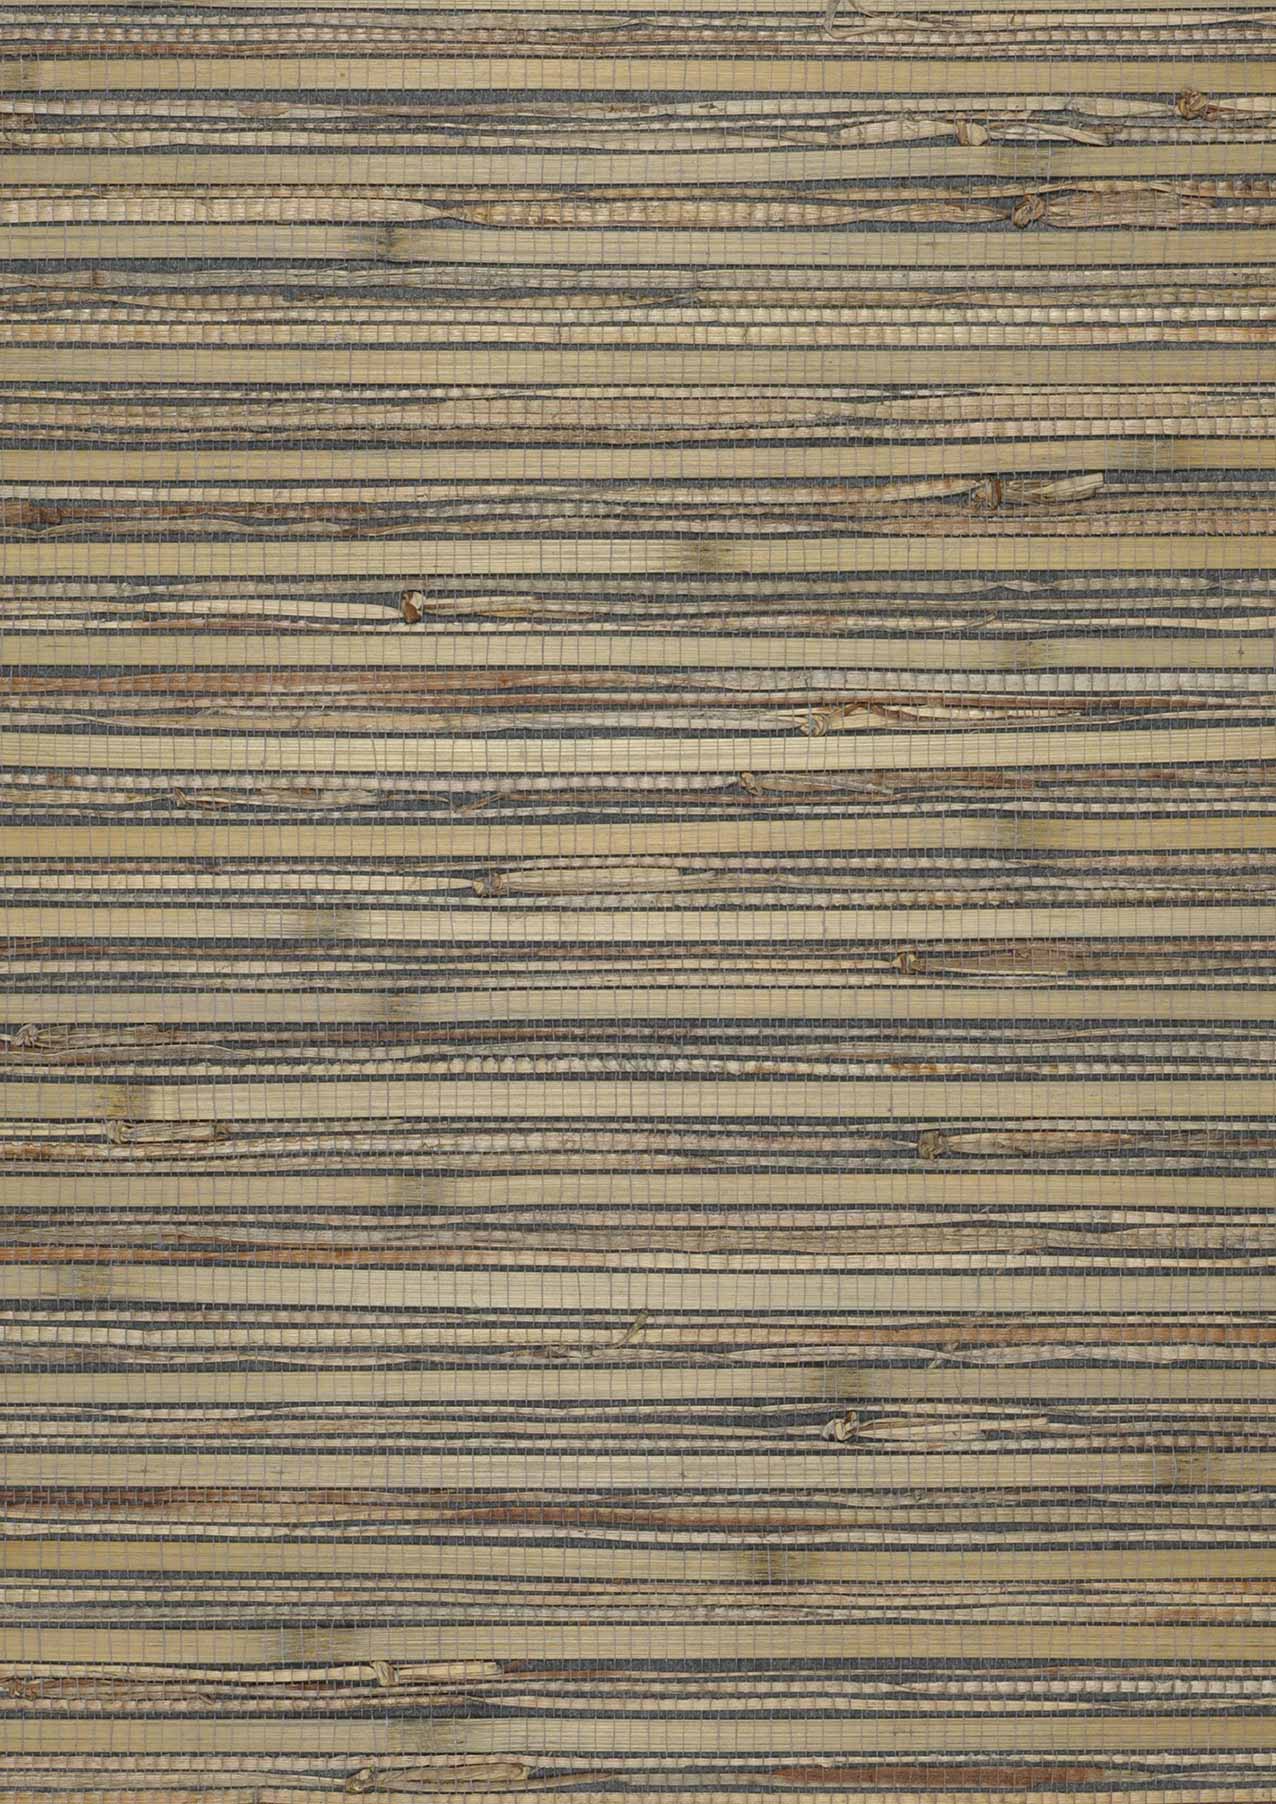 Natural Bamboo Wallpaper Materials From The